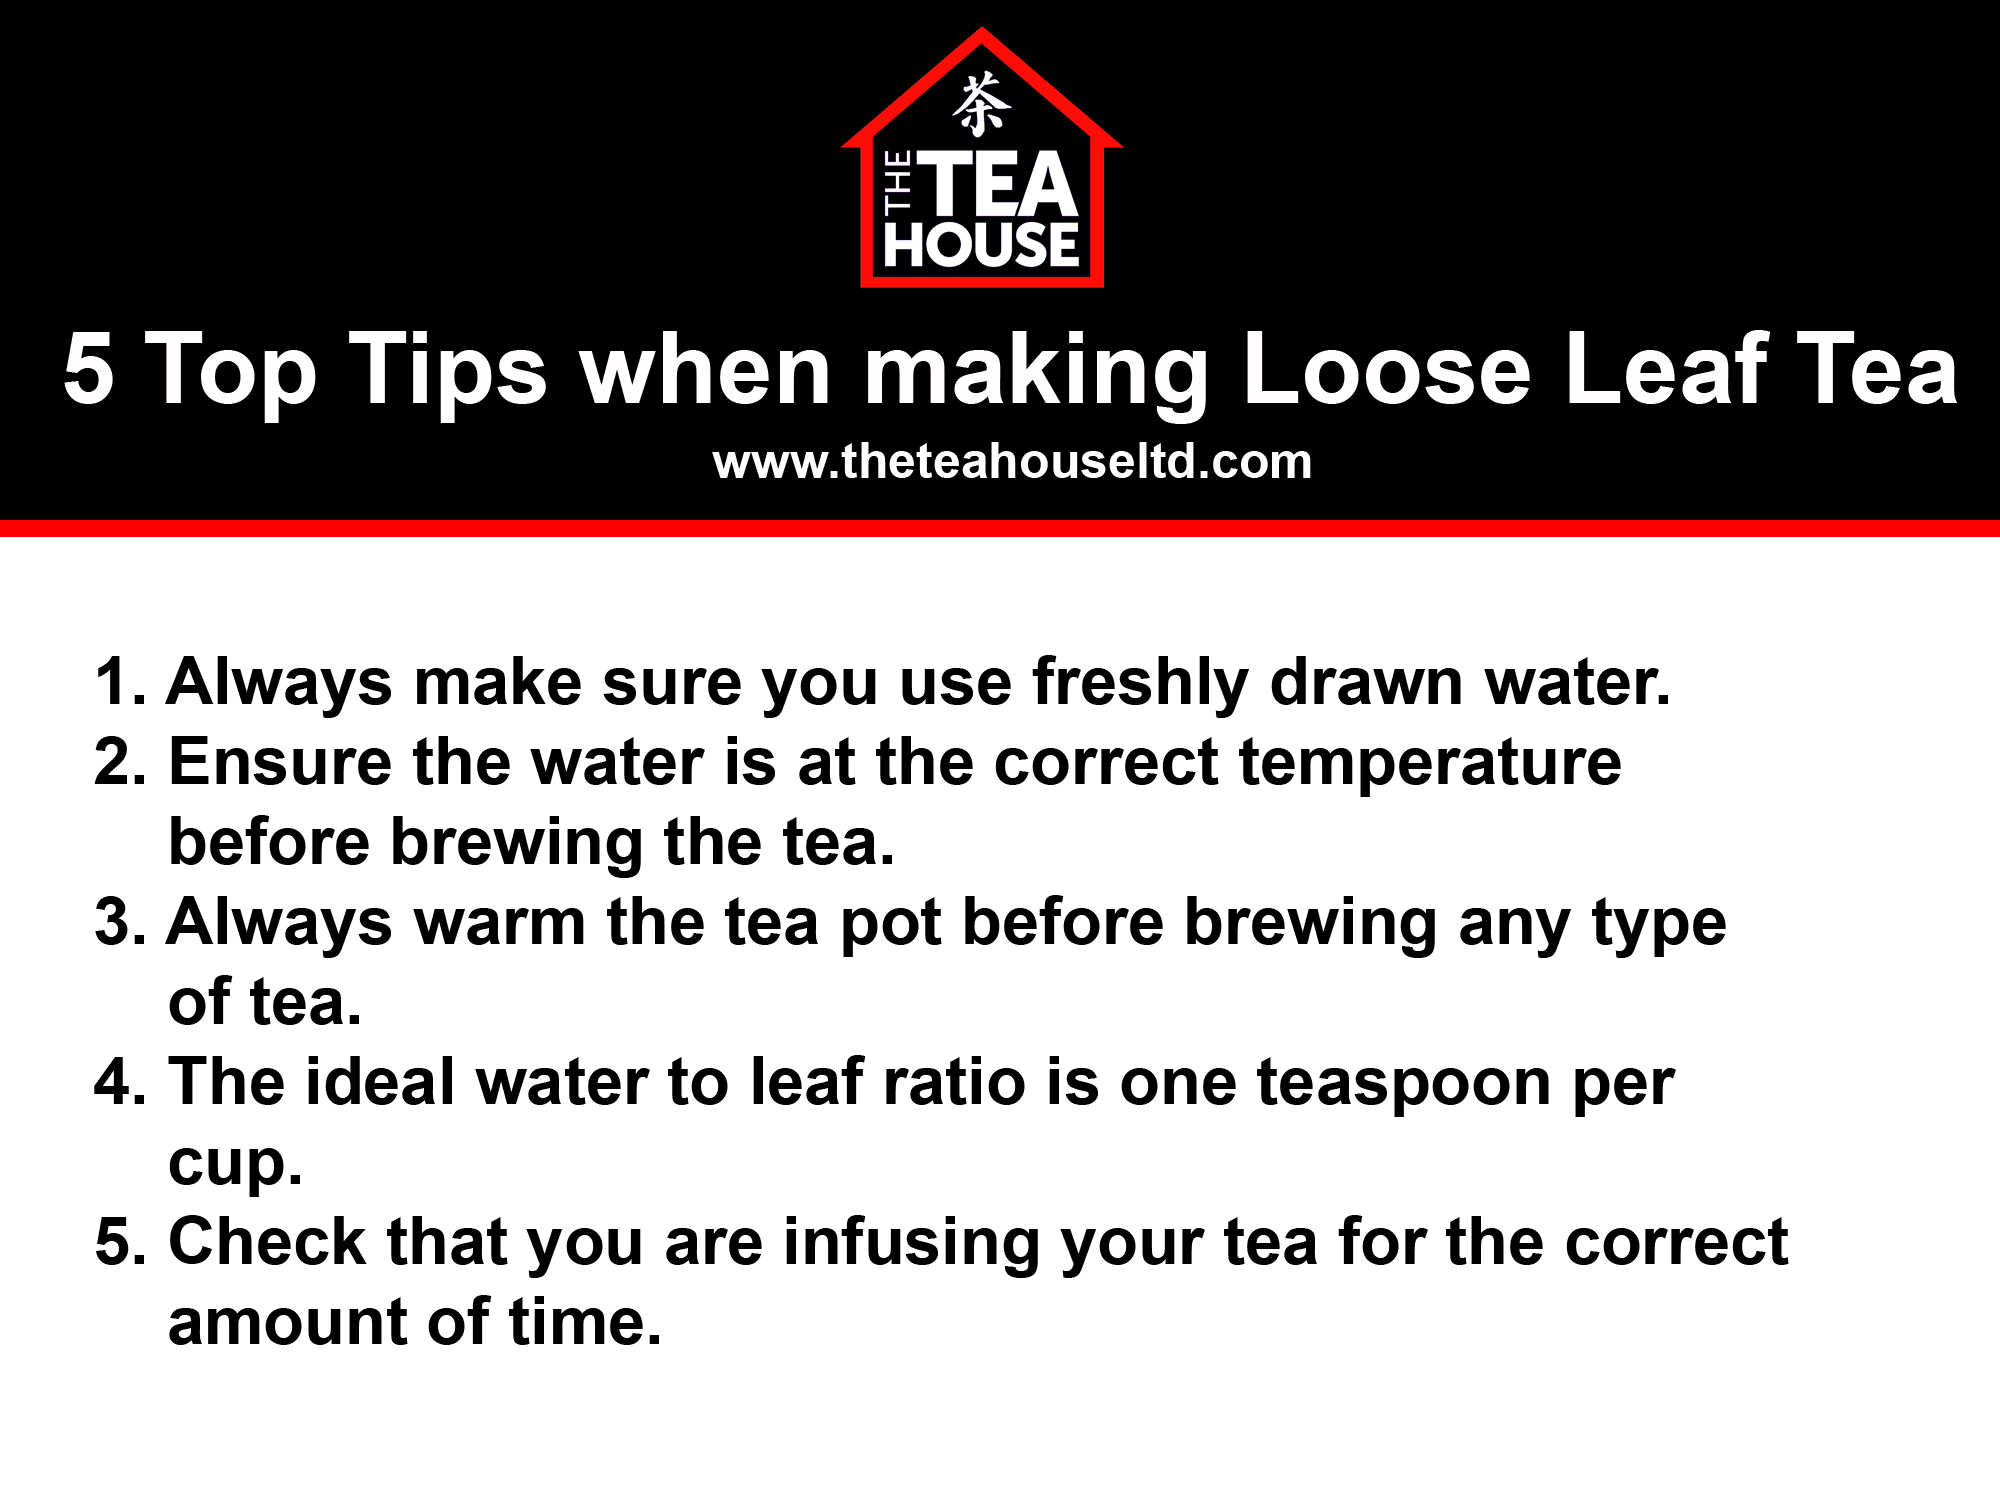 https://www.theteahouseltd.com/blog/wp-content/uploads/2018/08/Top-5-tips-for-making-loose-leaf-tea.jpg